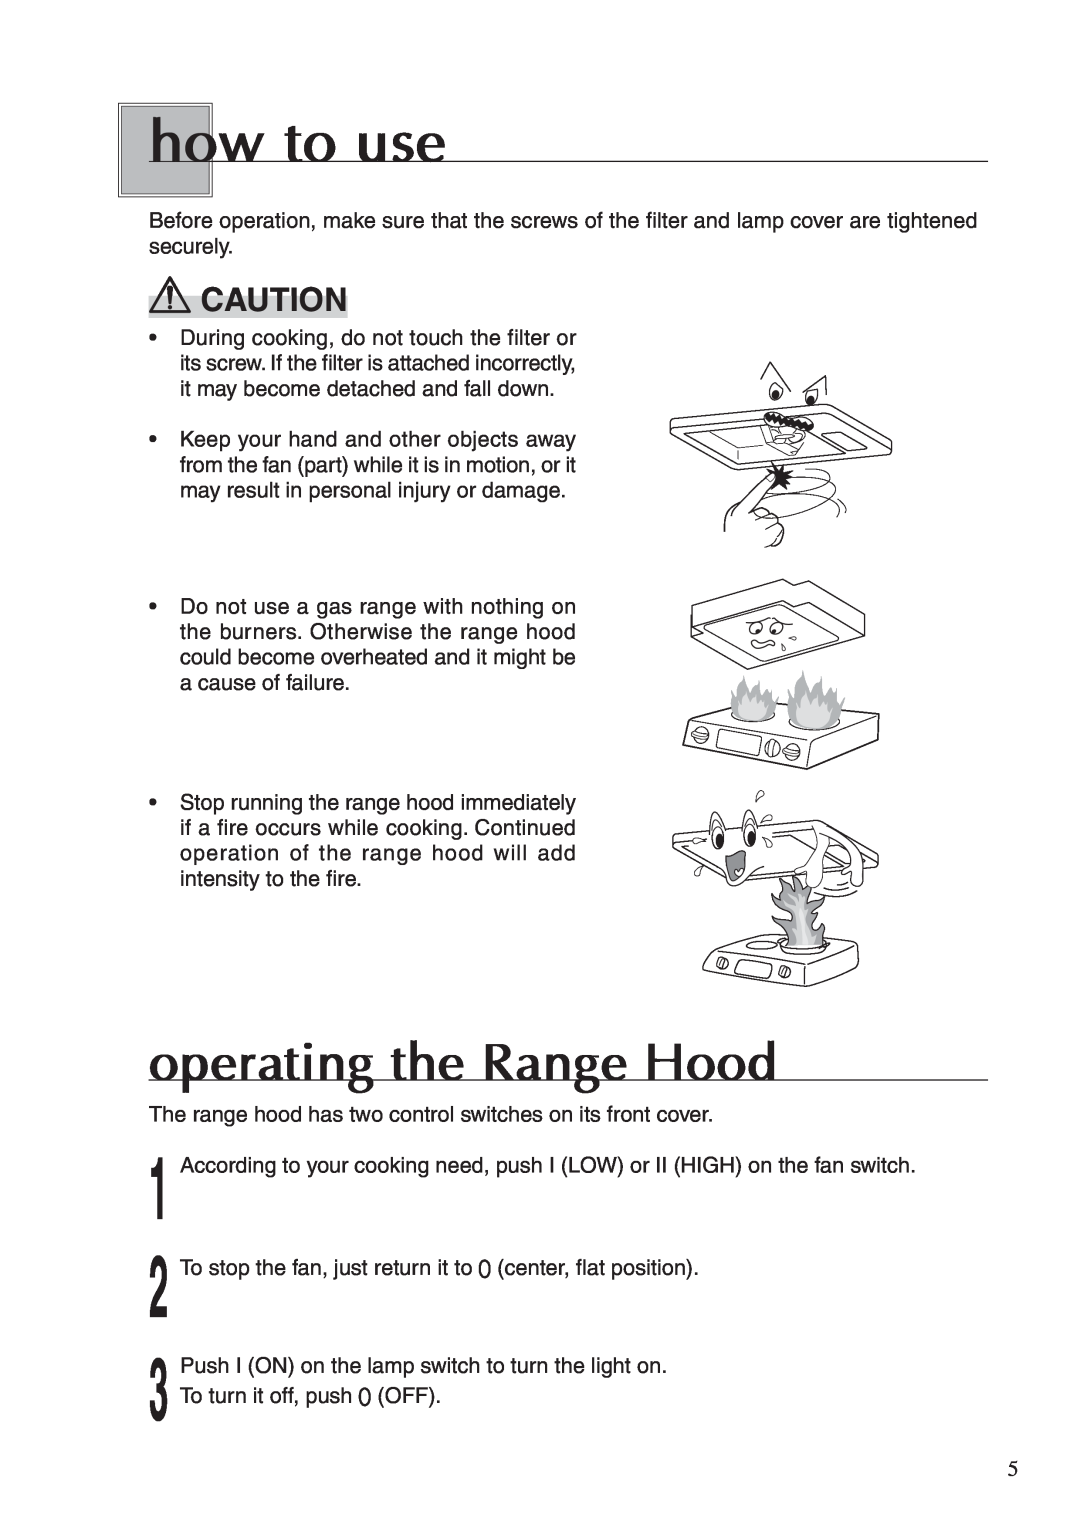 Fujioh BUF-04J operation manual how to use, operating the Range Hood 